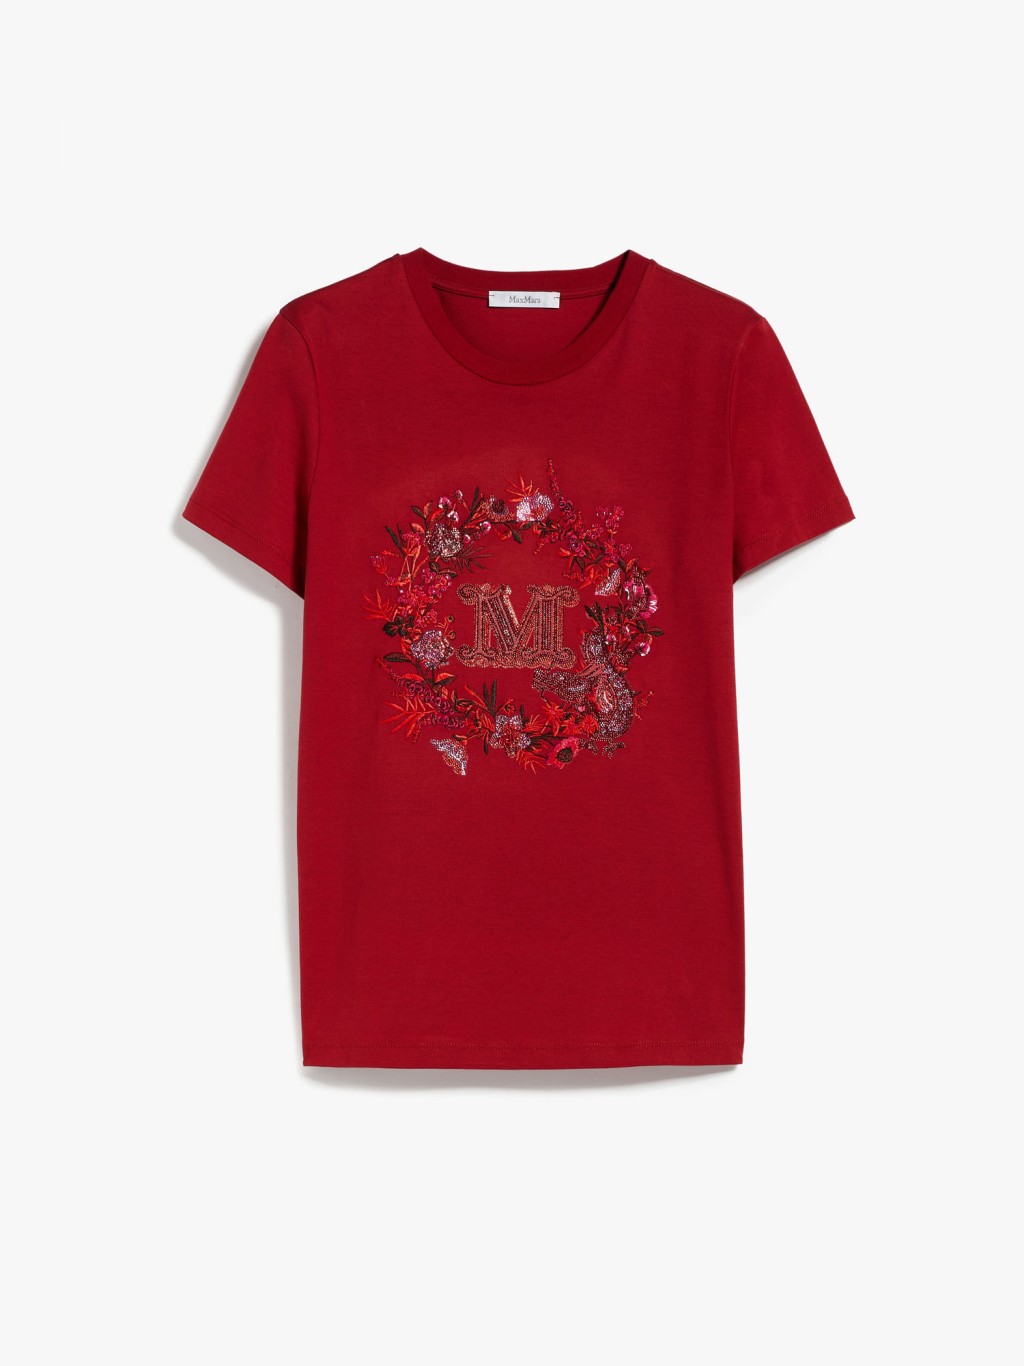 Max Mara新春特別系列的紅色T恤，印上深淺不一的紅色調花卉圖案，中間代表品牌的M字恍如被花環圍繞。